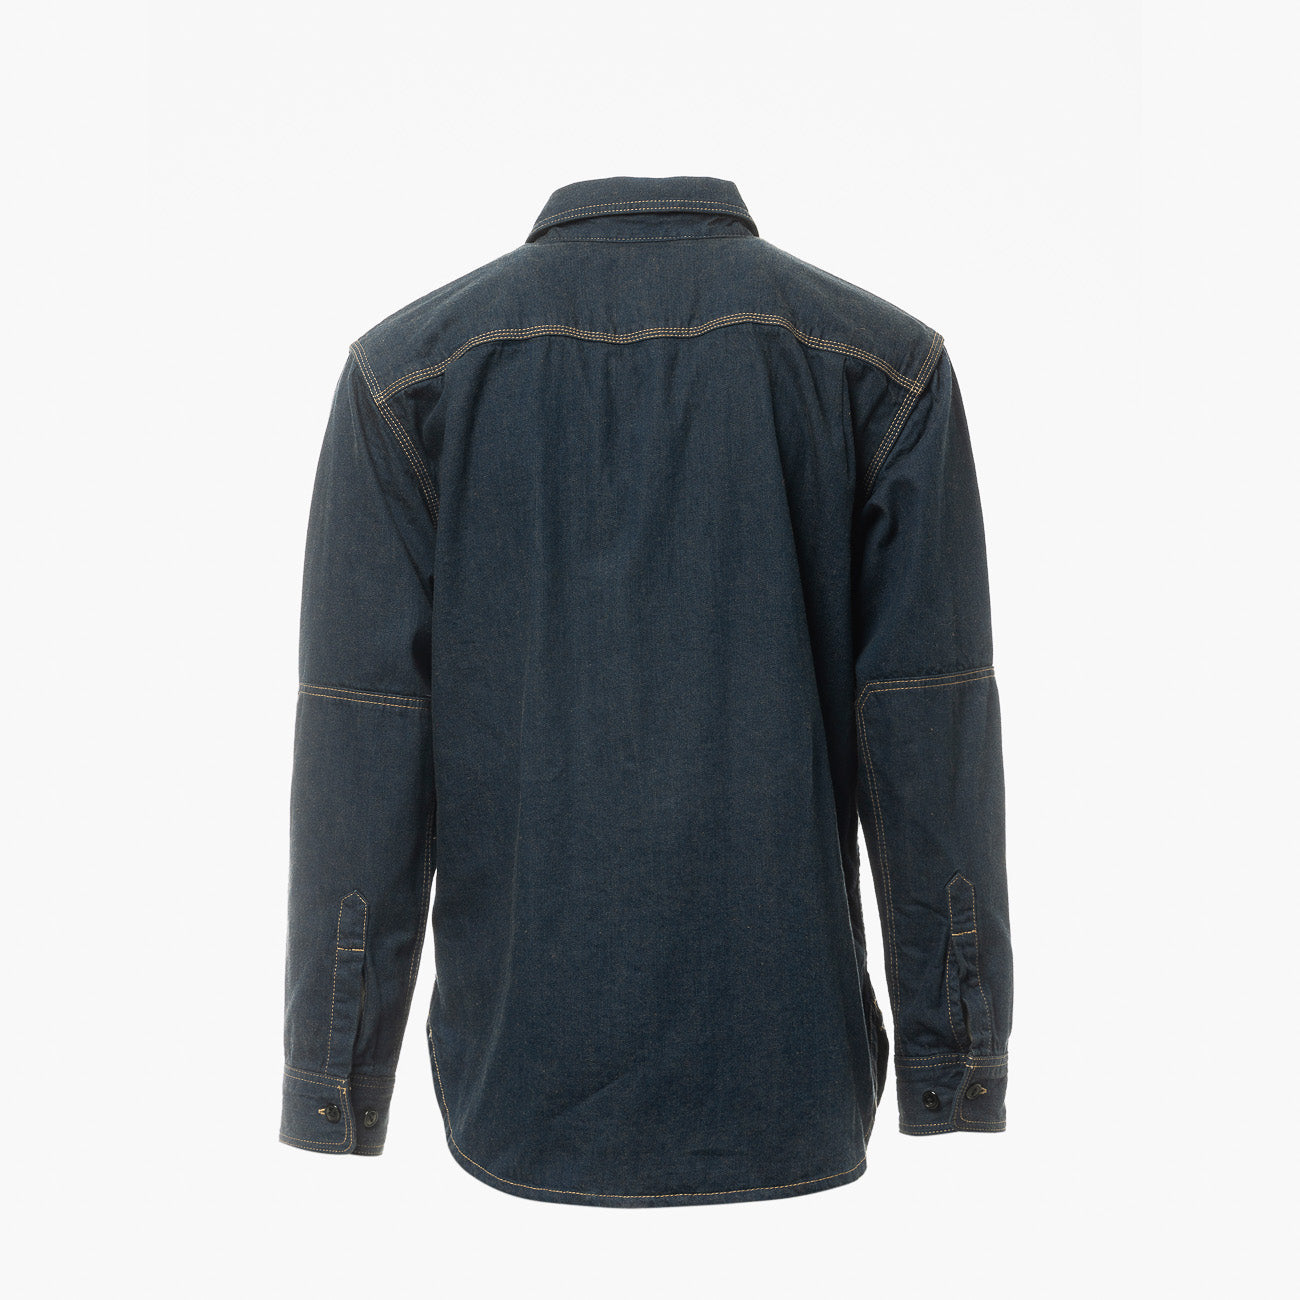 Filson Denim Work long-sleeve shirt in blue jeans cotton